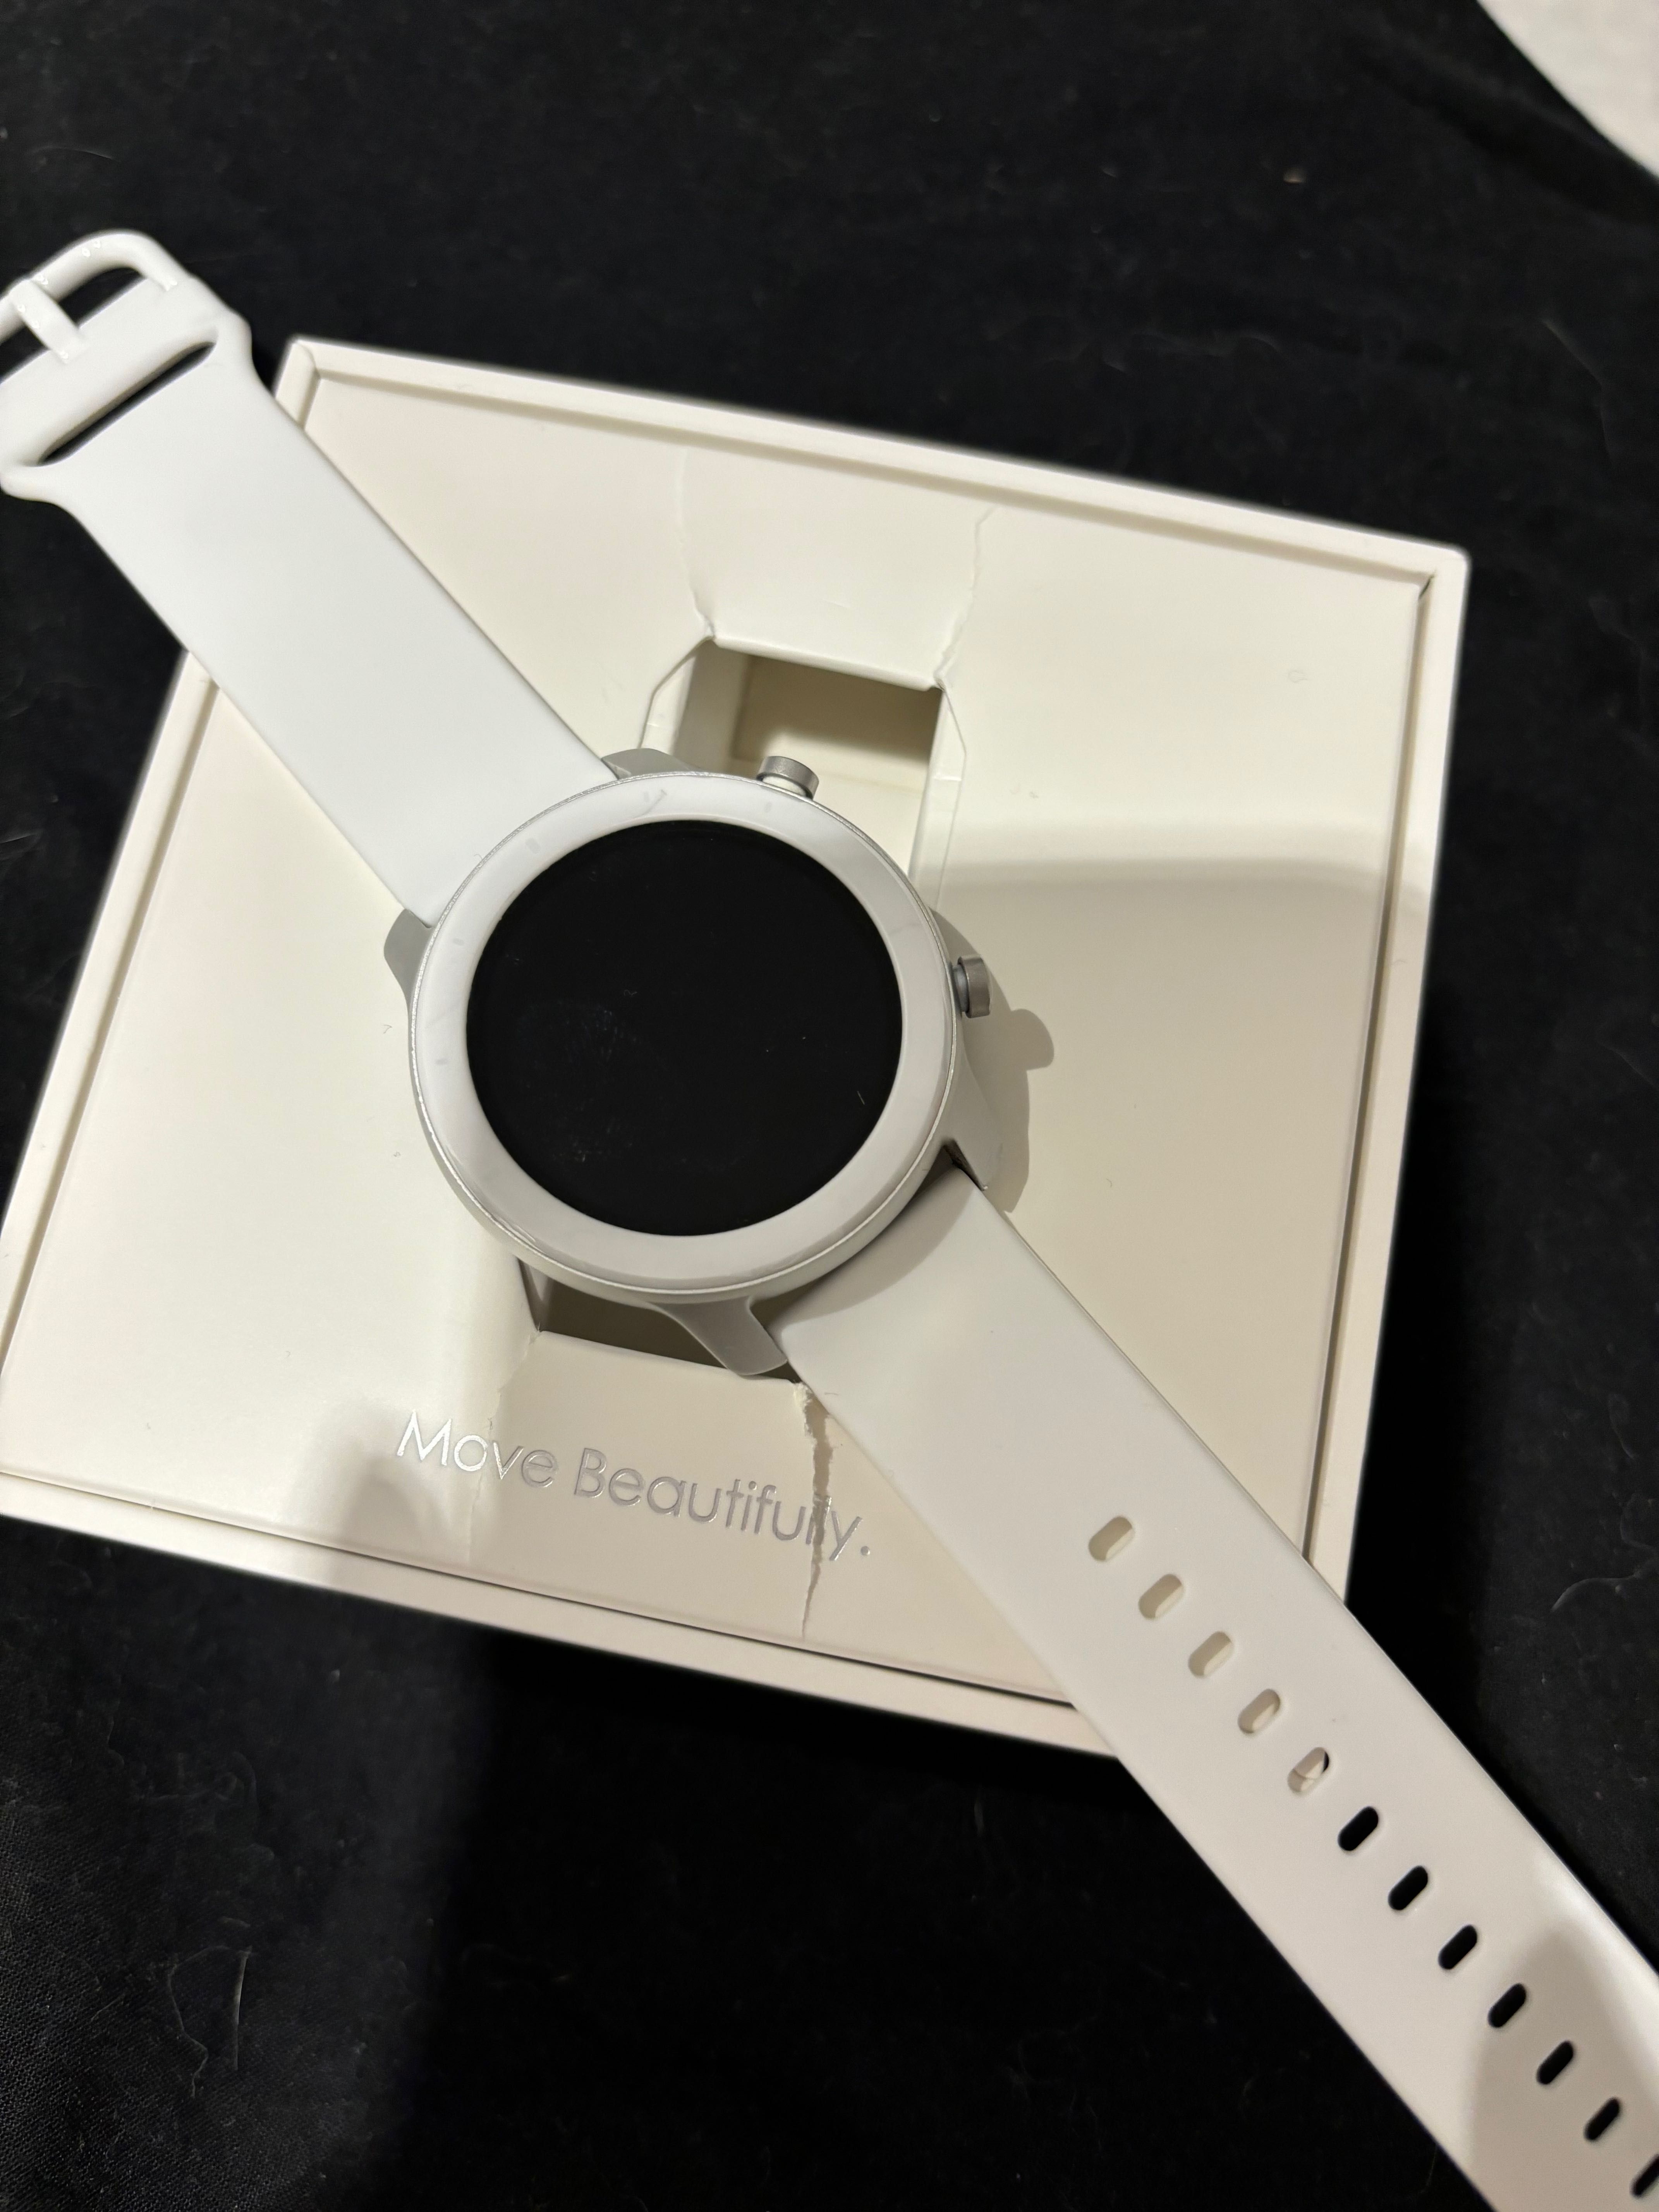 Amazfit GTR smartwatch